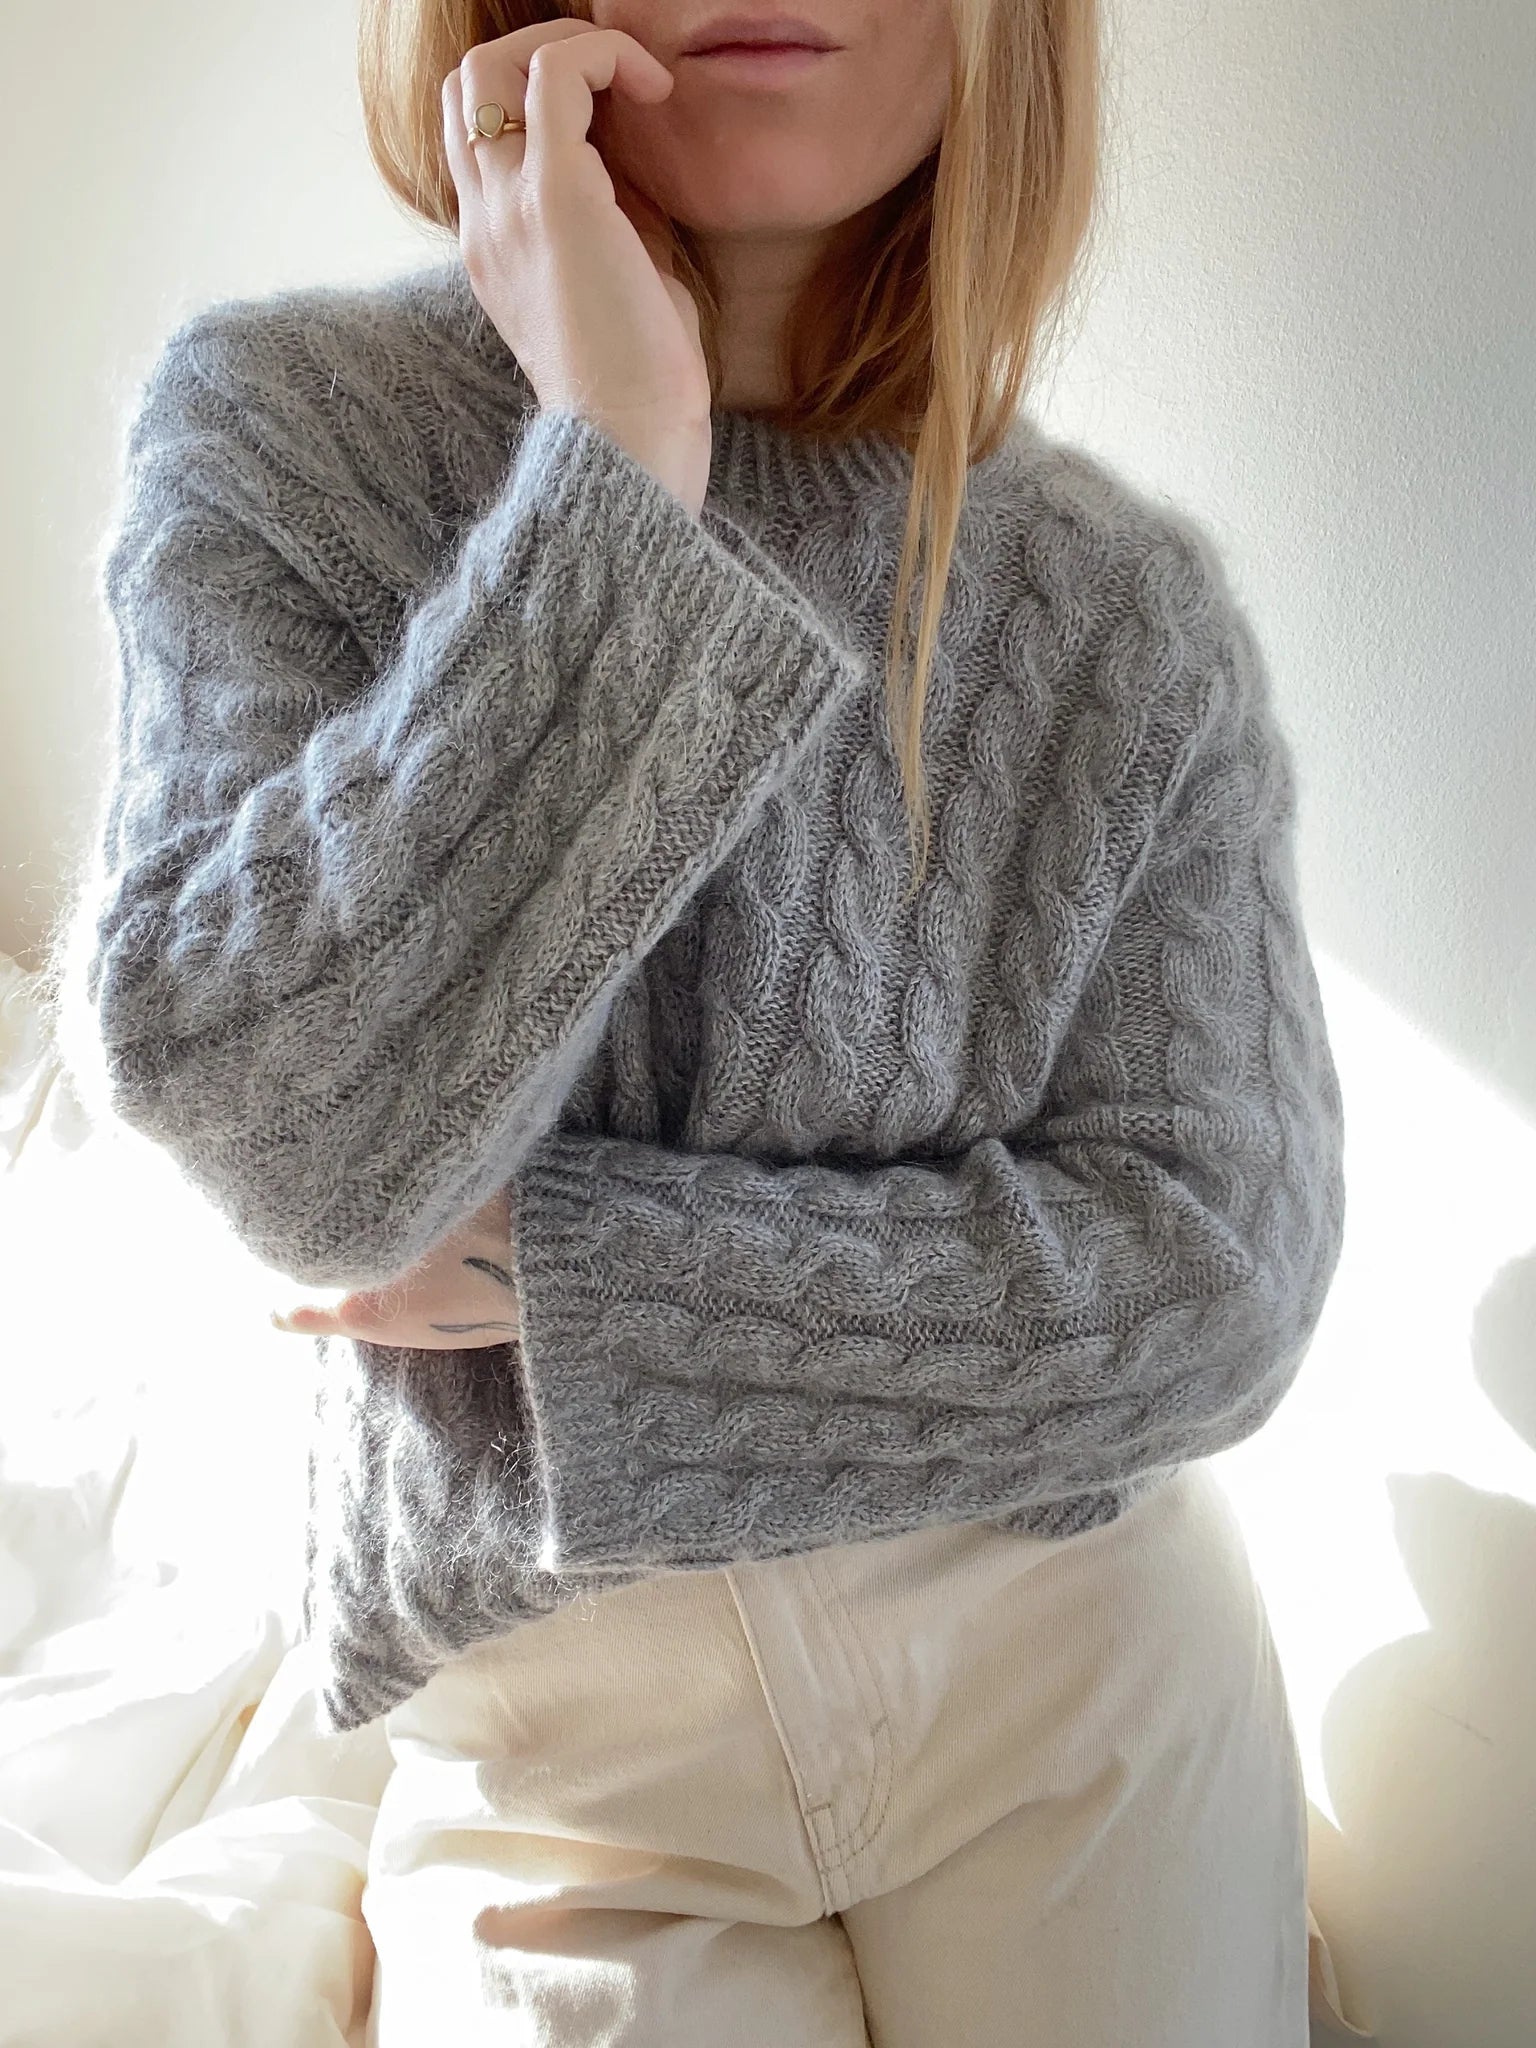 Sweater No. 15 - My Favourite Things Knitwear - Strikkekit